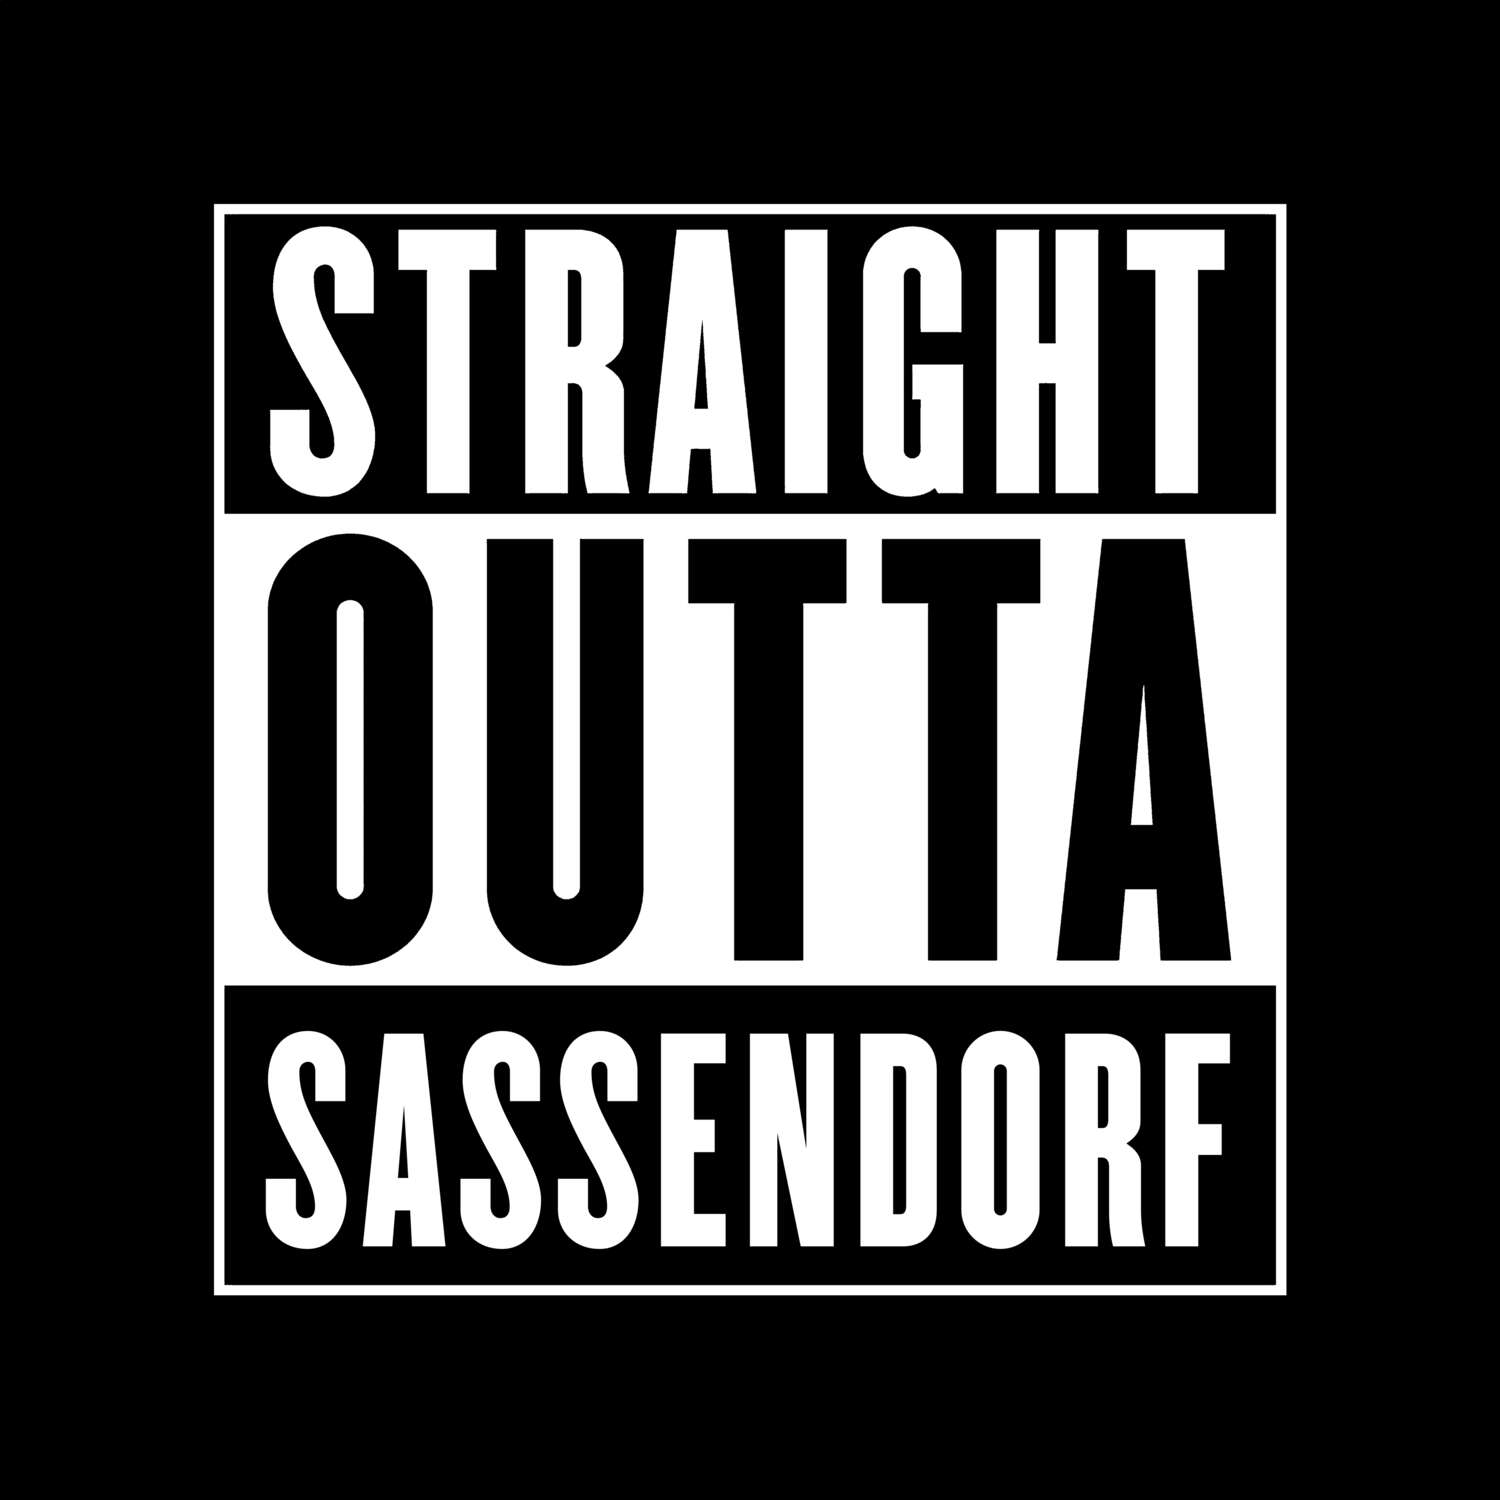 Sassendorf T-Shirt »Straight Outta«